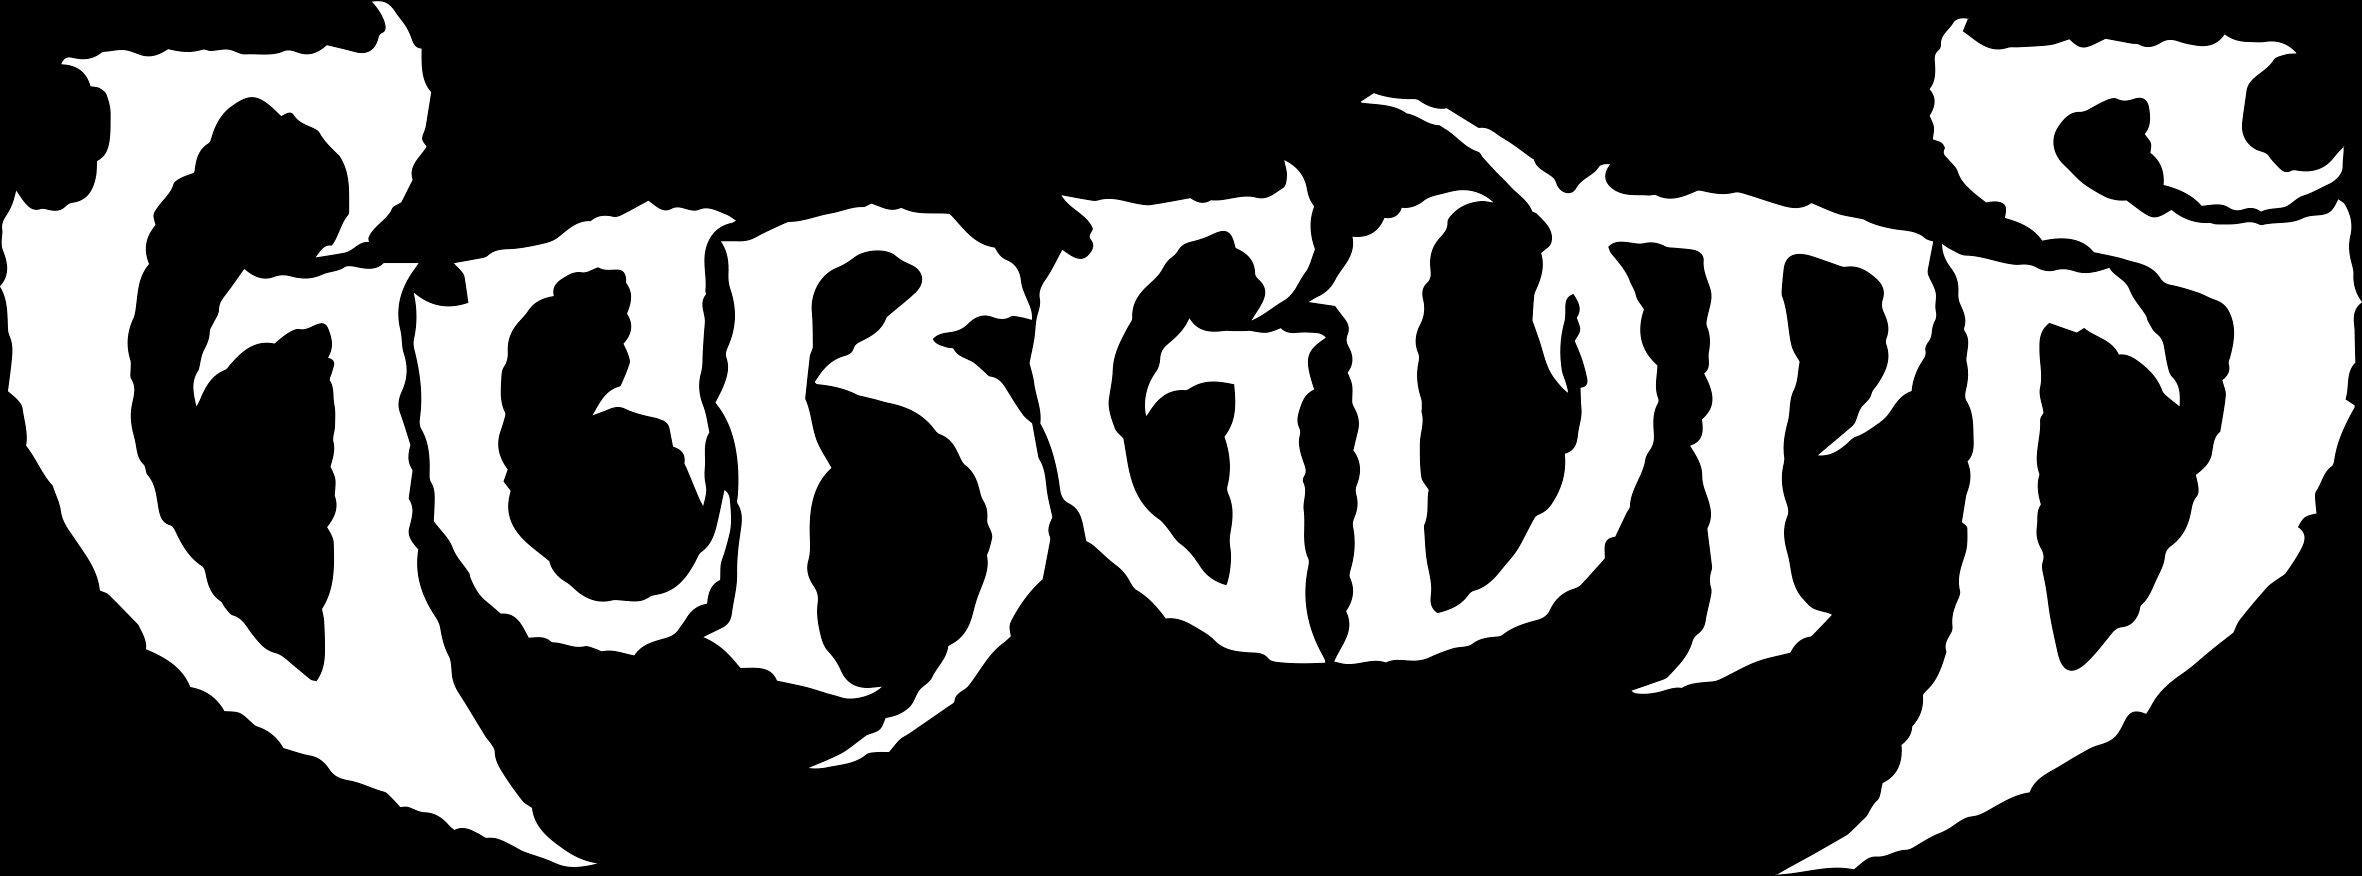 Gorguts Logo - Gorguts Logos